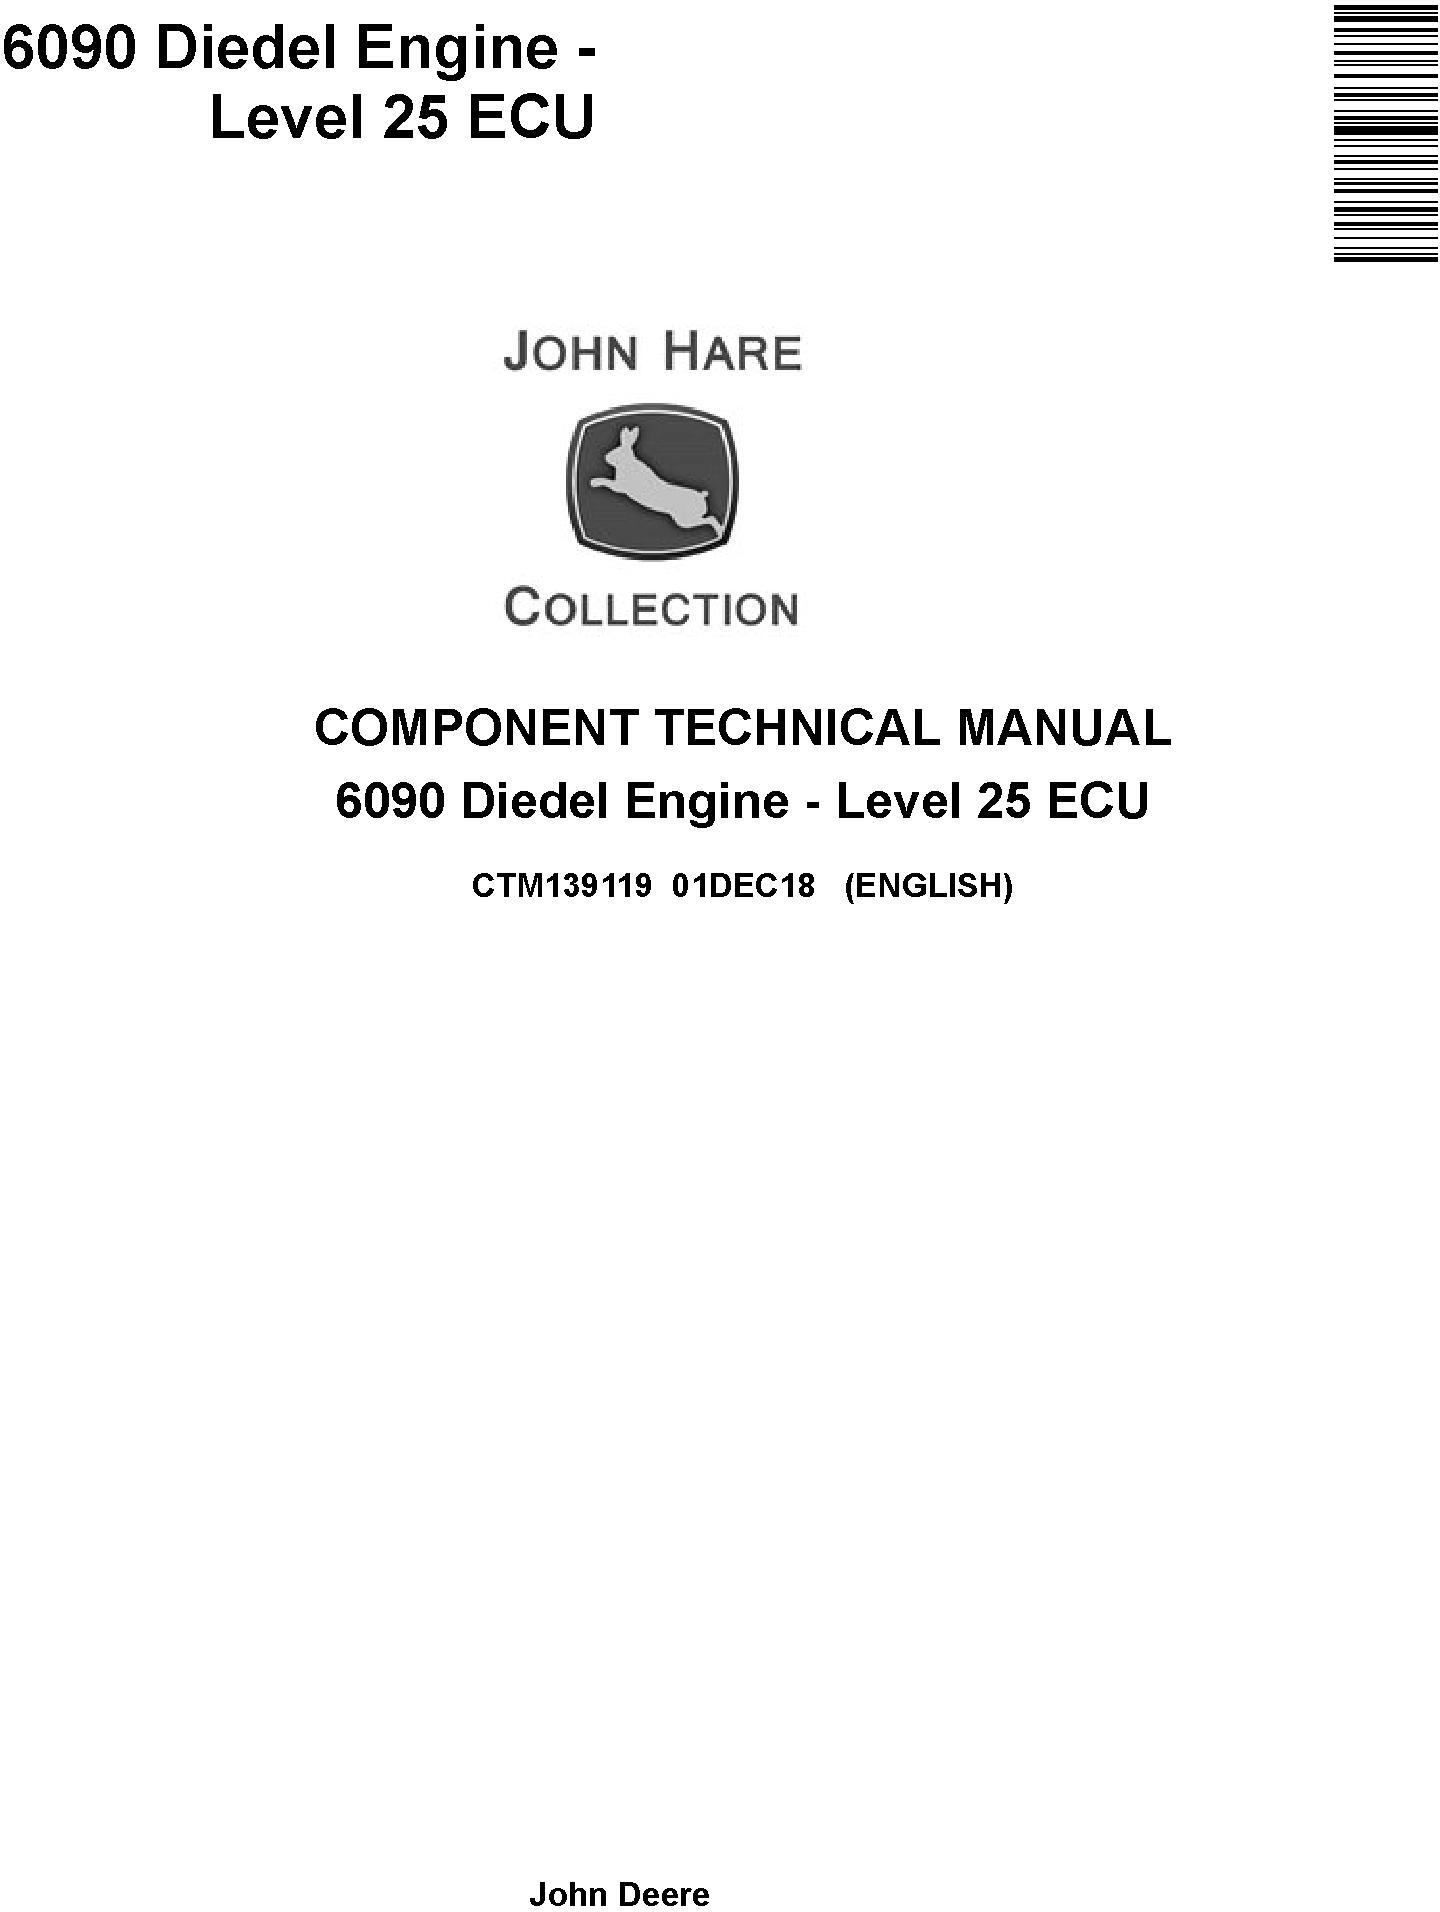 John Deere PowerTech 6090 Level 25 ECU Diesel Engine Component Technical Manual CTM139119